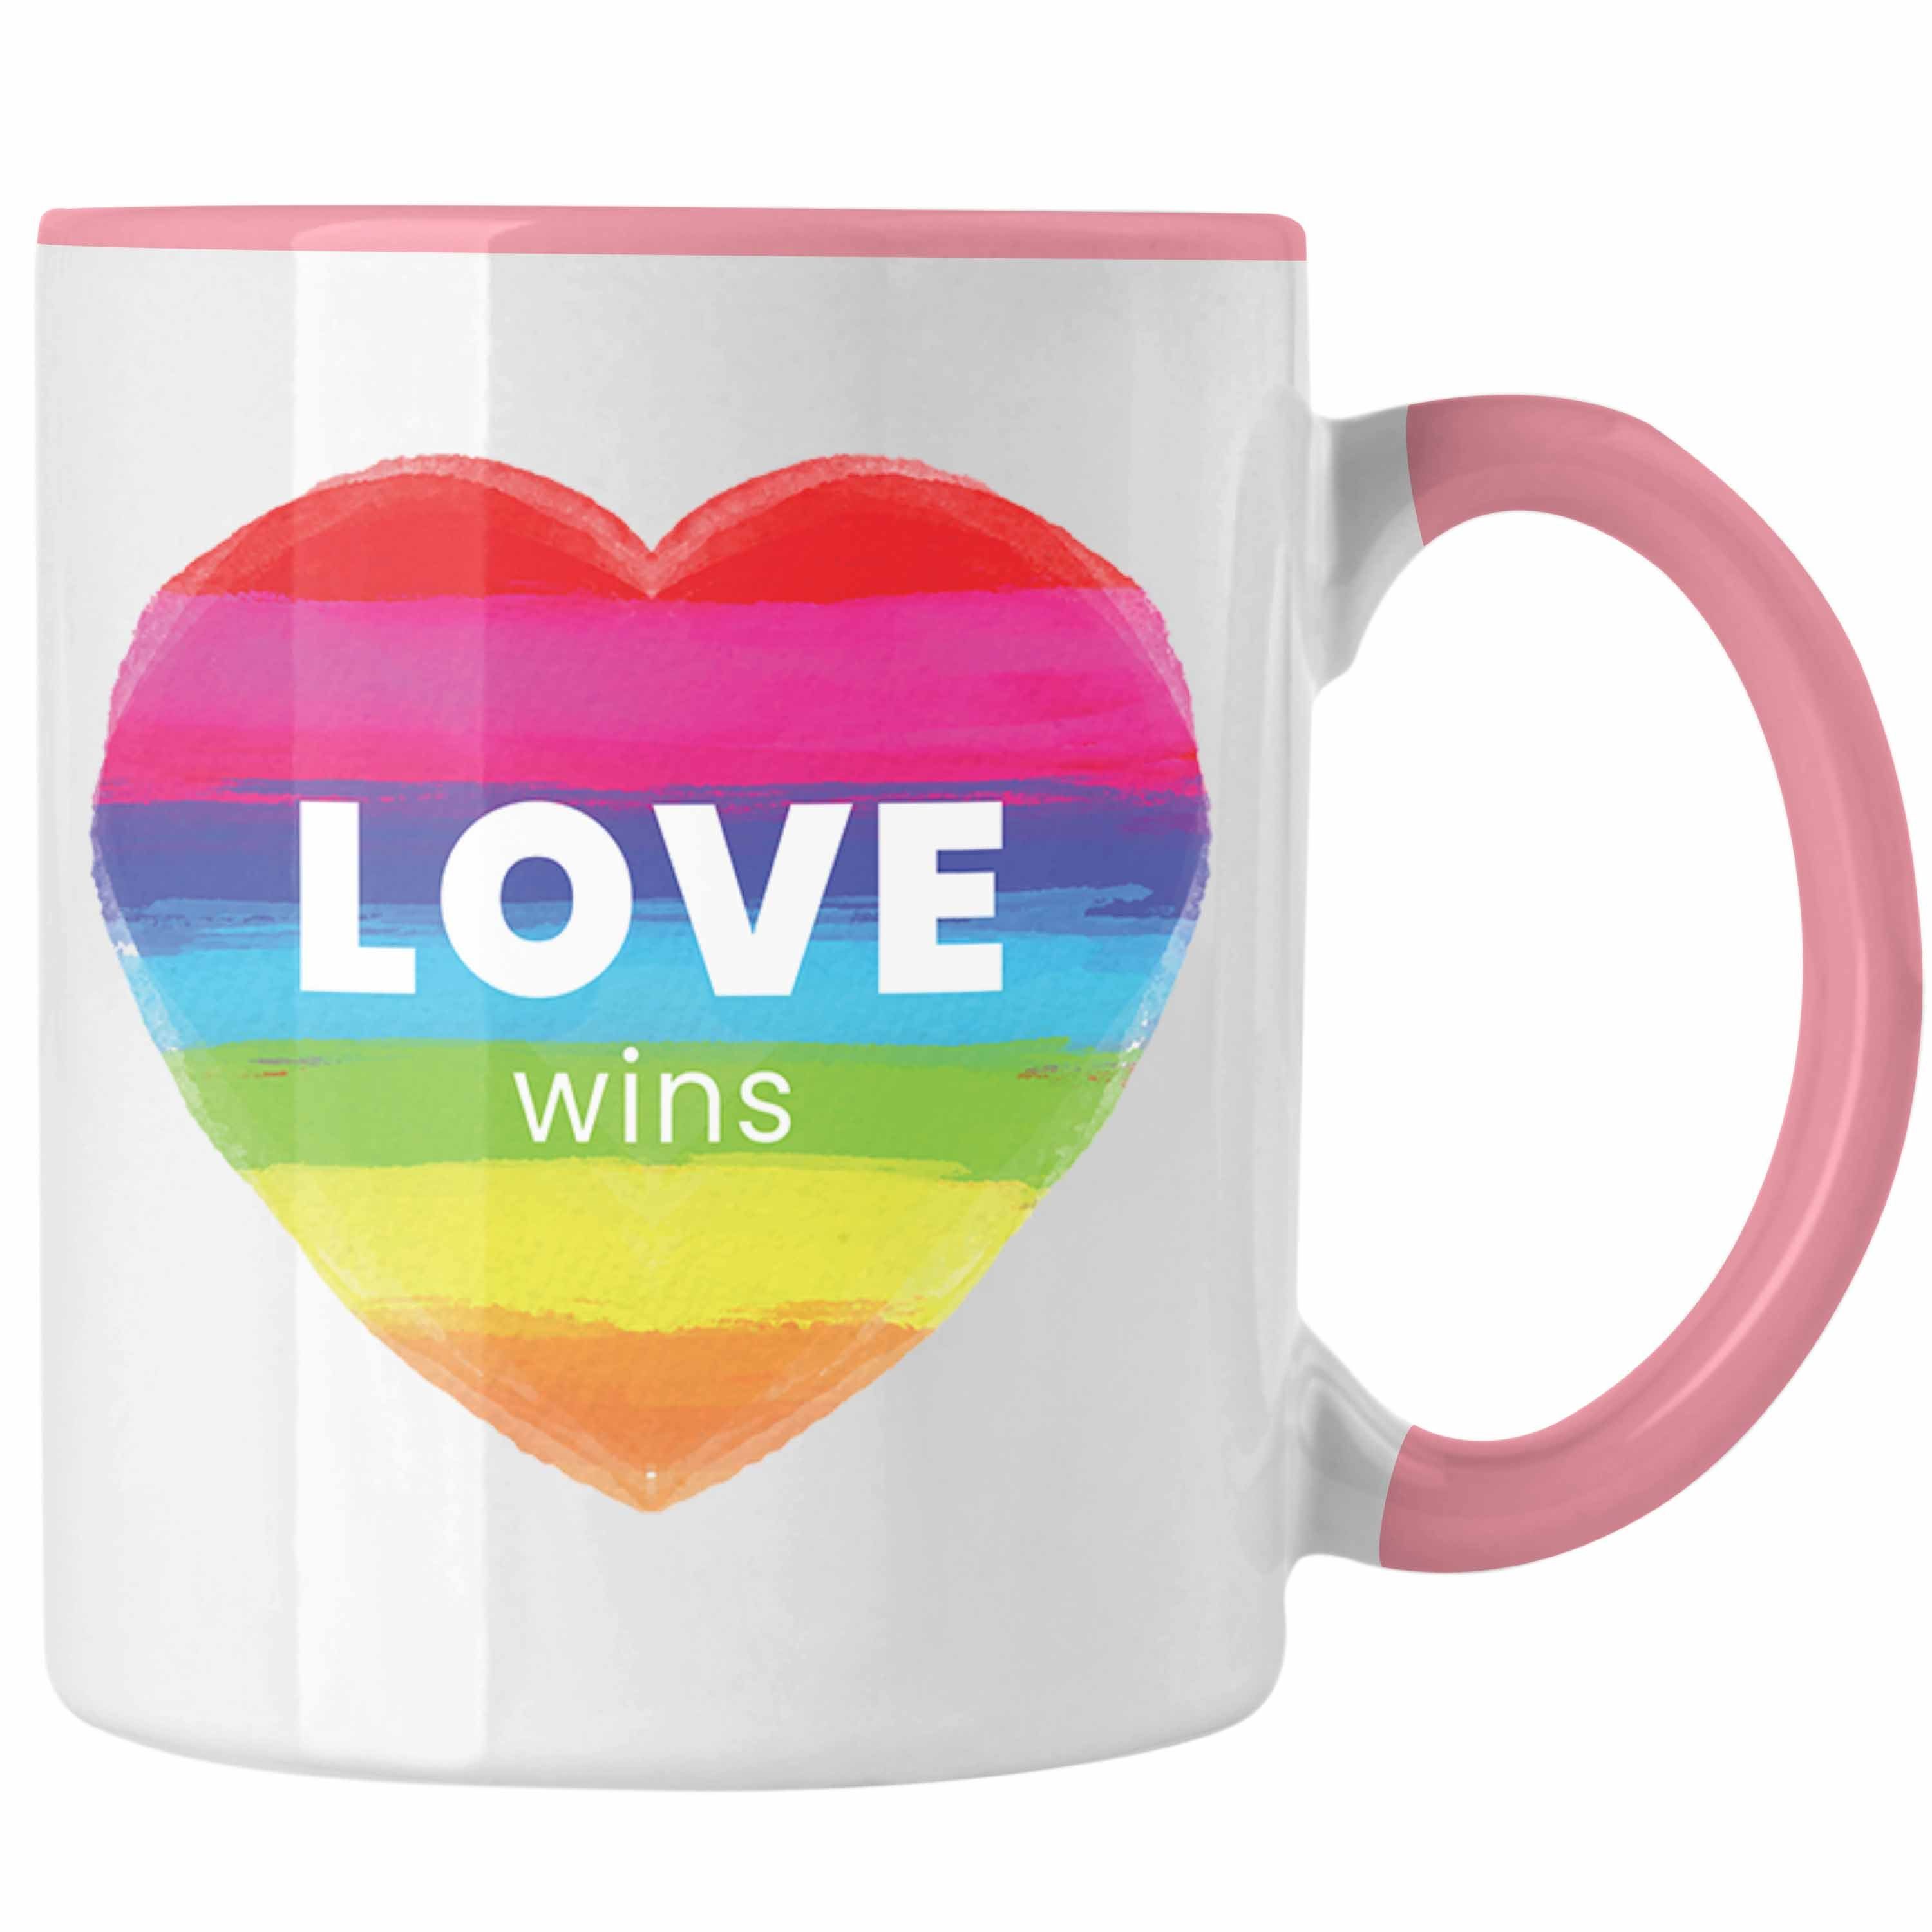 Trendation Tasse Trendation - Regenbogen Tasse Geschenk LGBT Schwule Lesben Transgender Grafik Pride Love Rosa